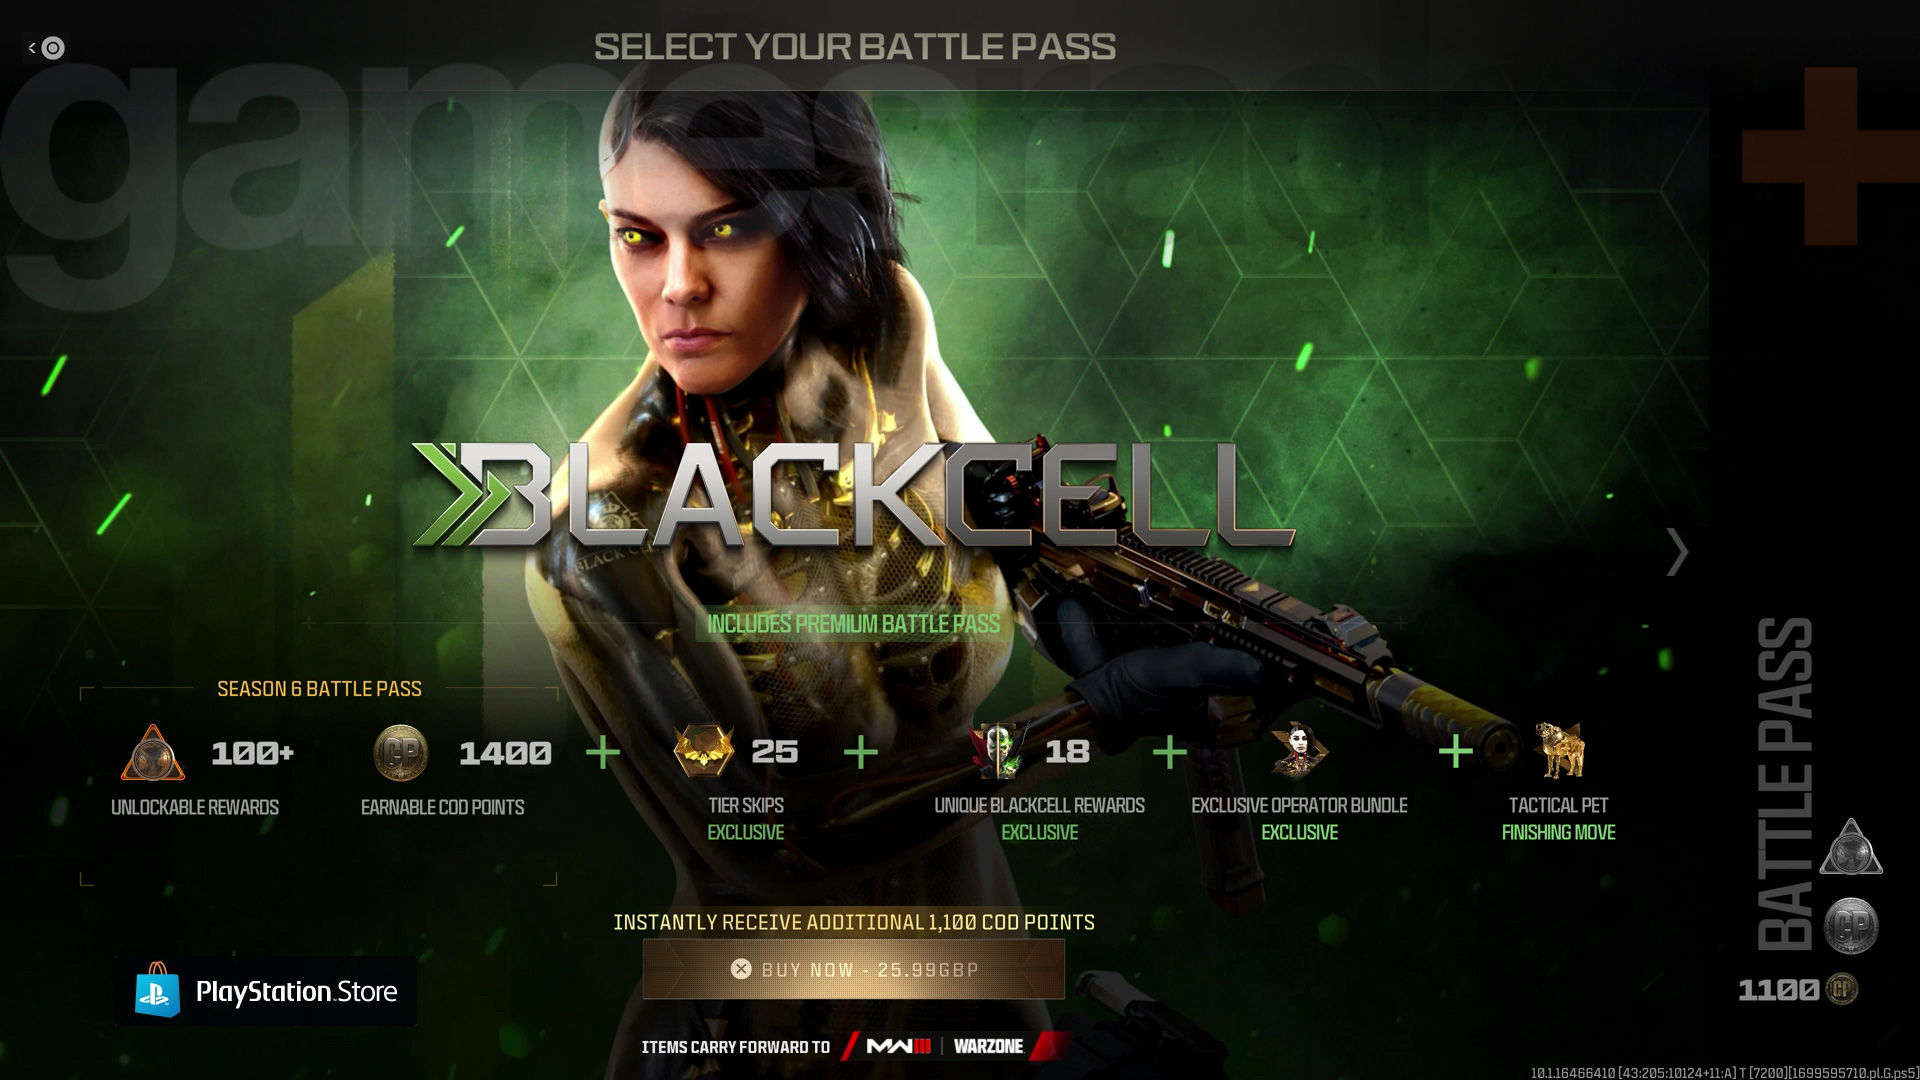 BlackCell Modern Warfare 3 Battle Pass Season 1 -paketti